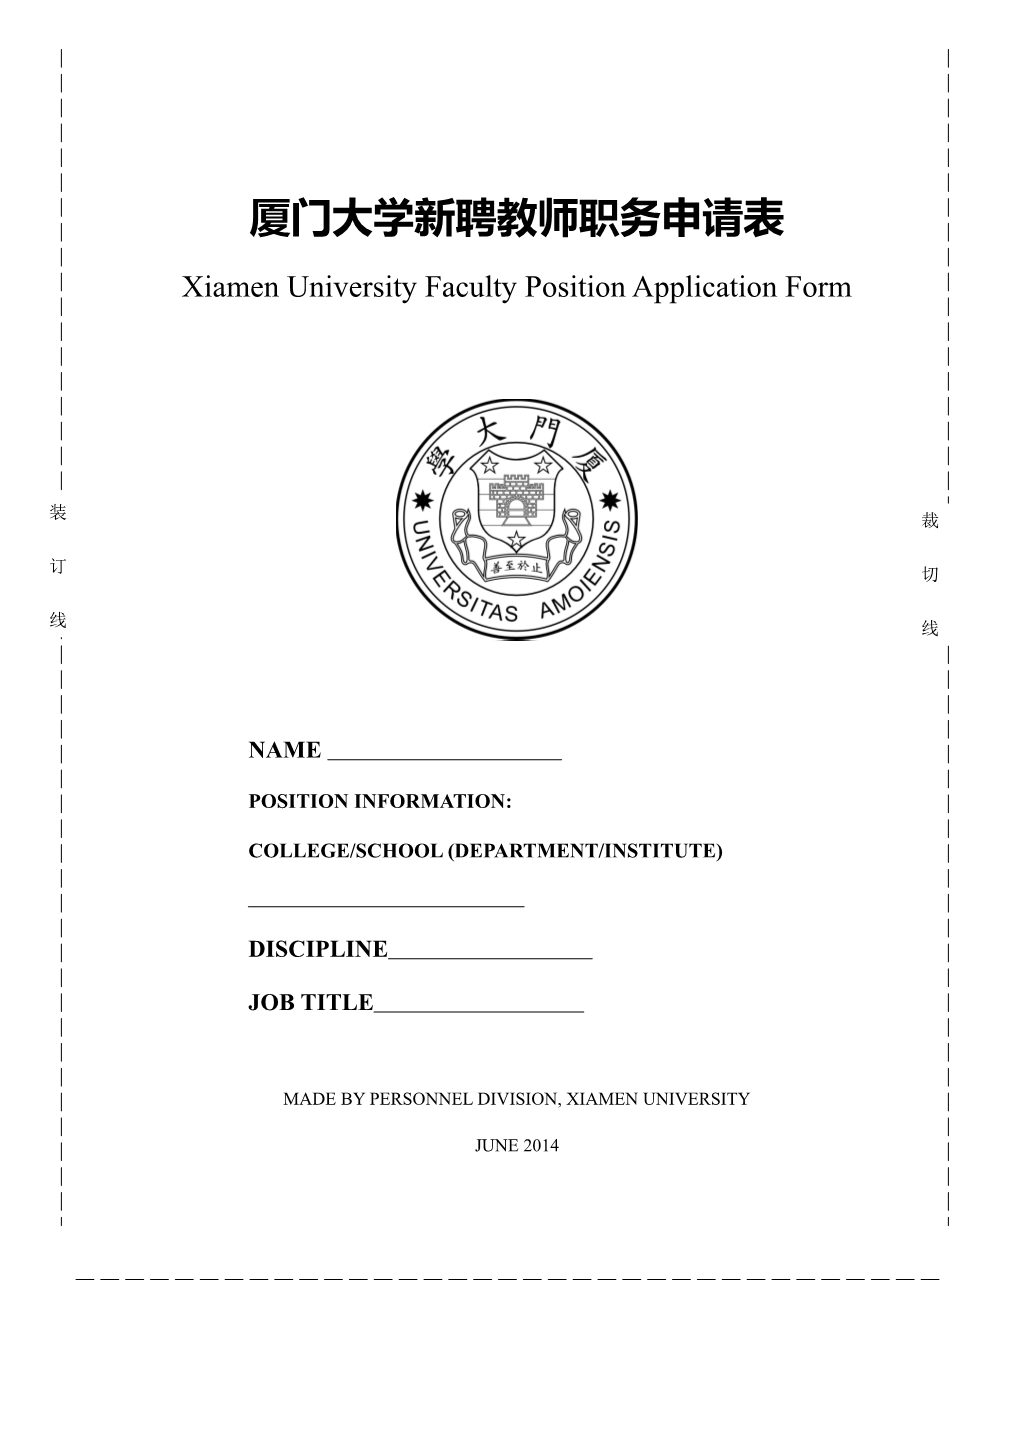 Xiamen University Faculty Position Application Form